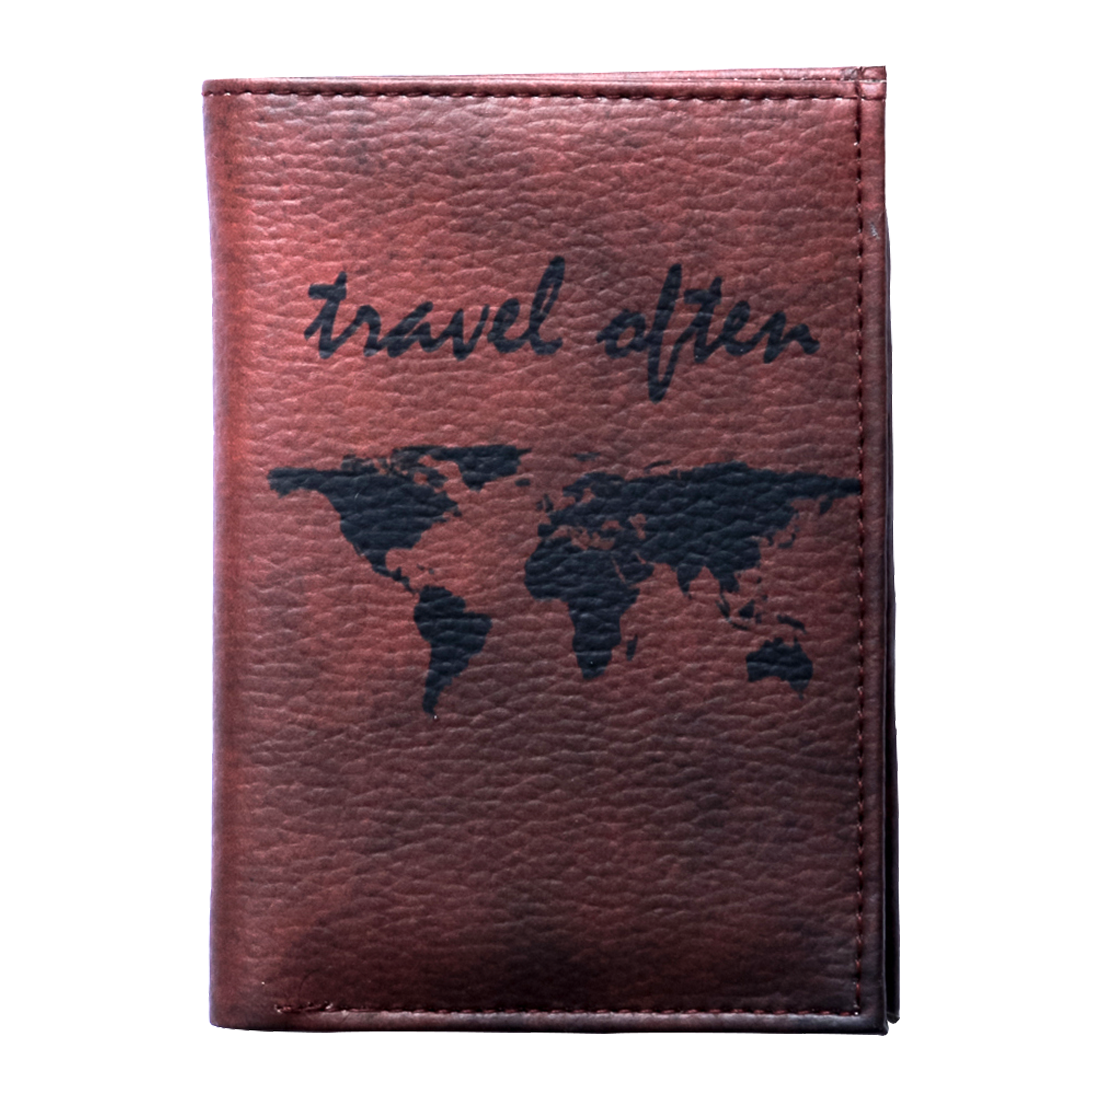 Travel Often Wallet & Passport Cover